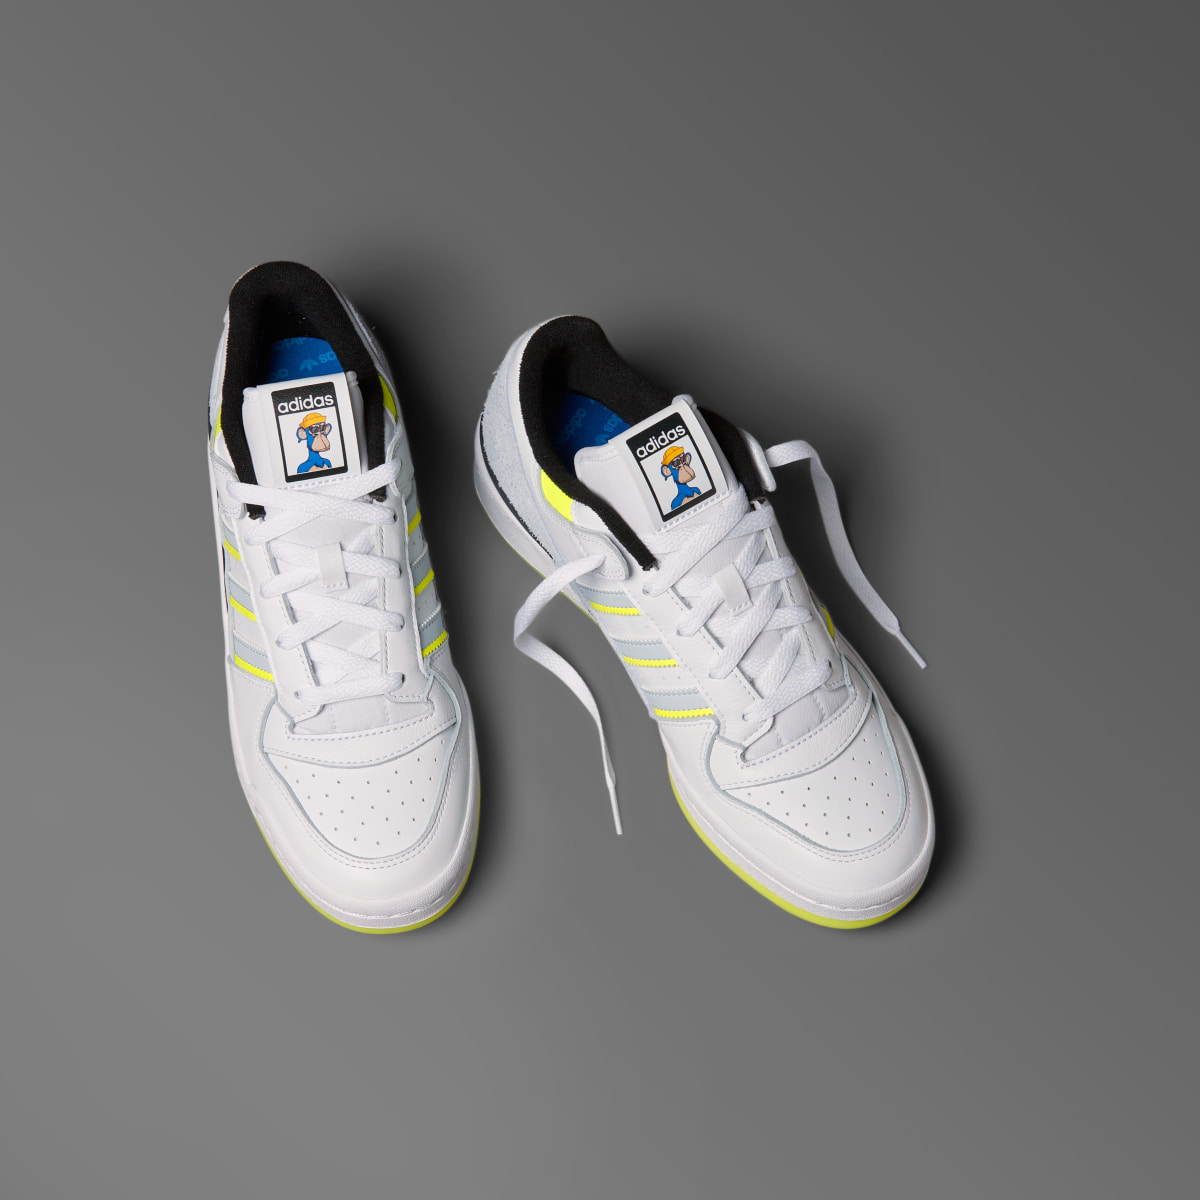 Adidas Forum Low CL x Indigo Herz Shoes. 5